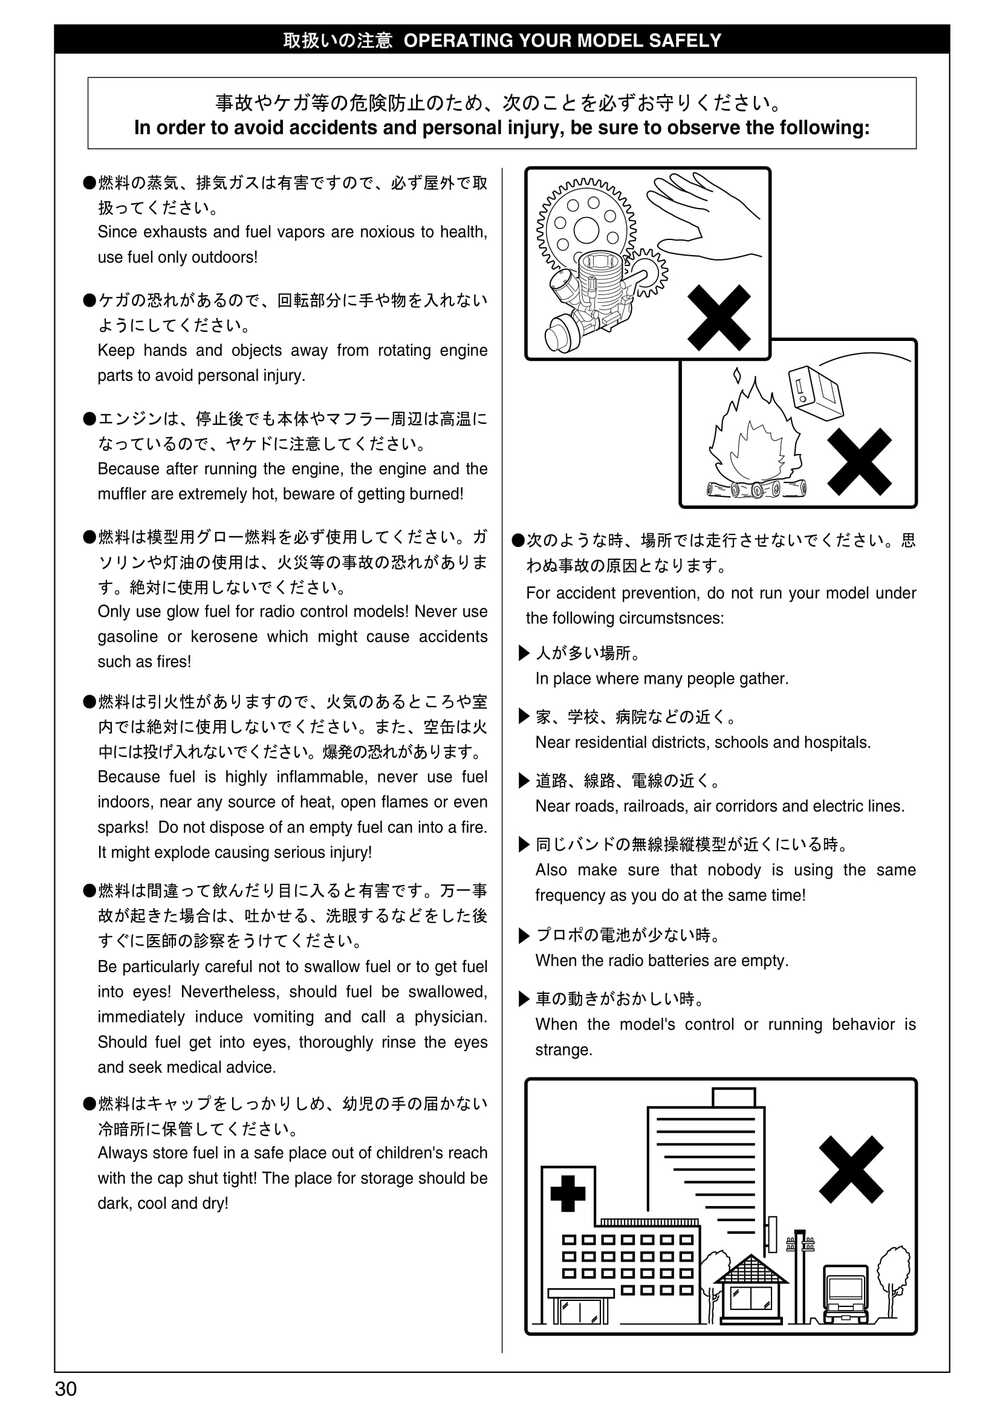 Kyosho - 31041 - Fantom Sports - Manual - Page 30